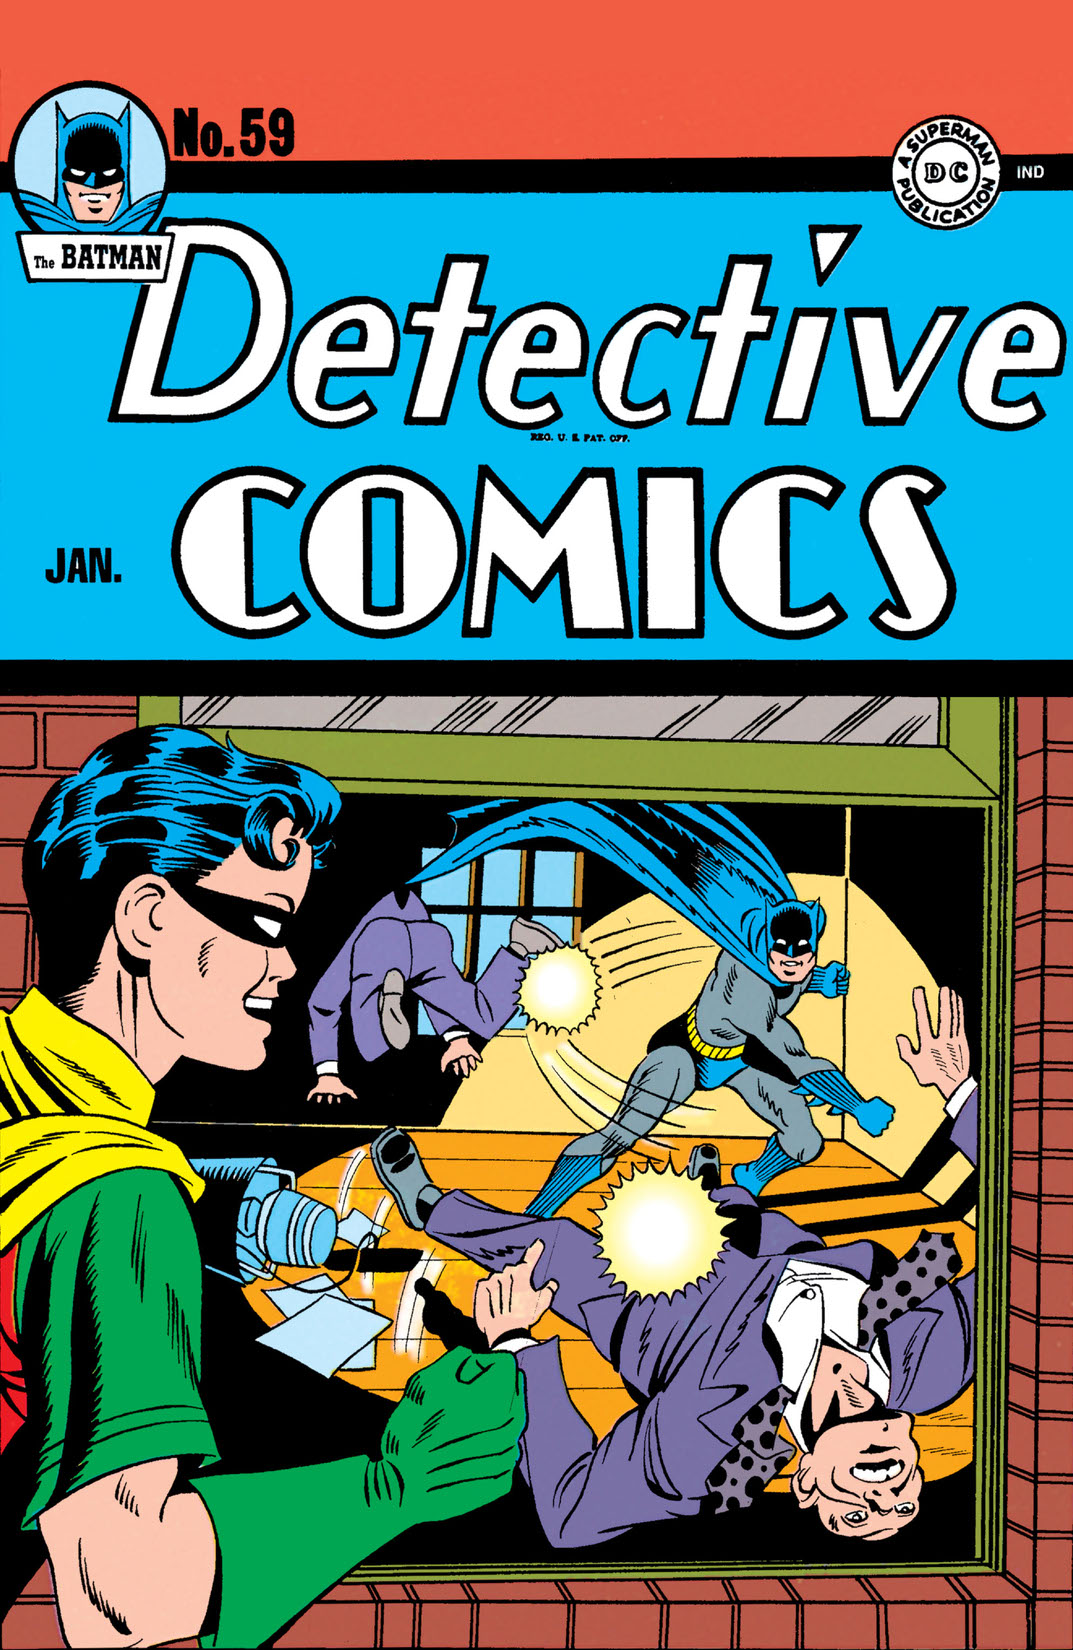 Detective Comics (1937-) #59 preview images